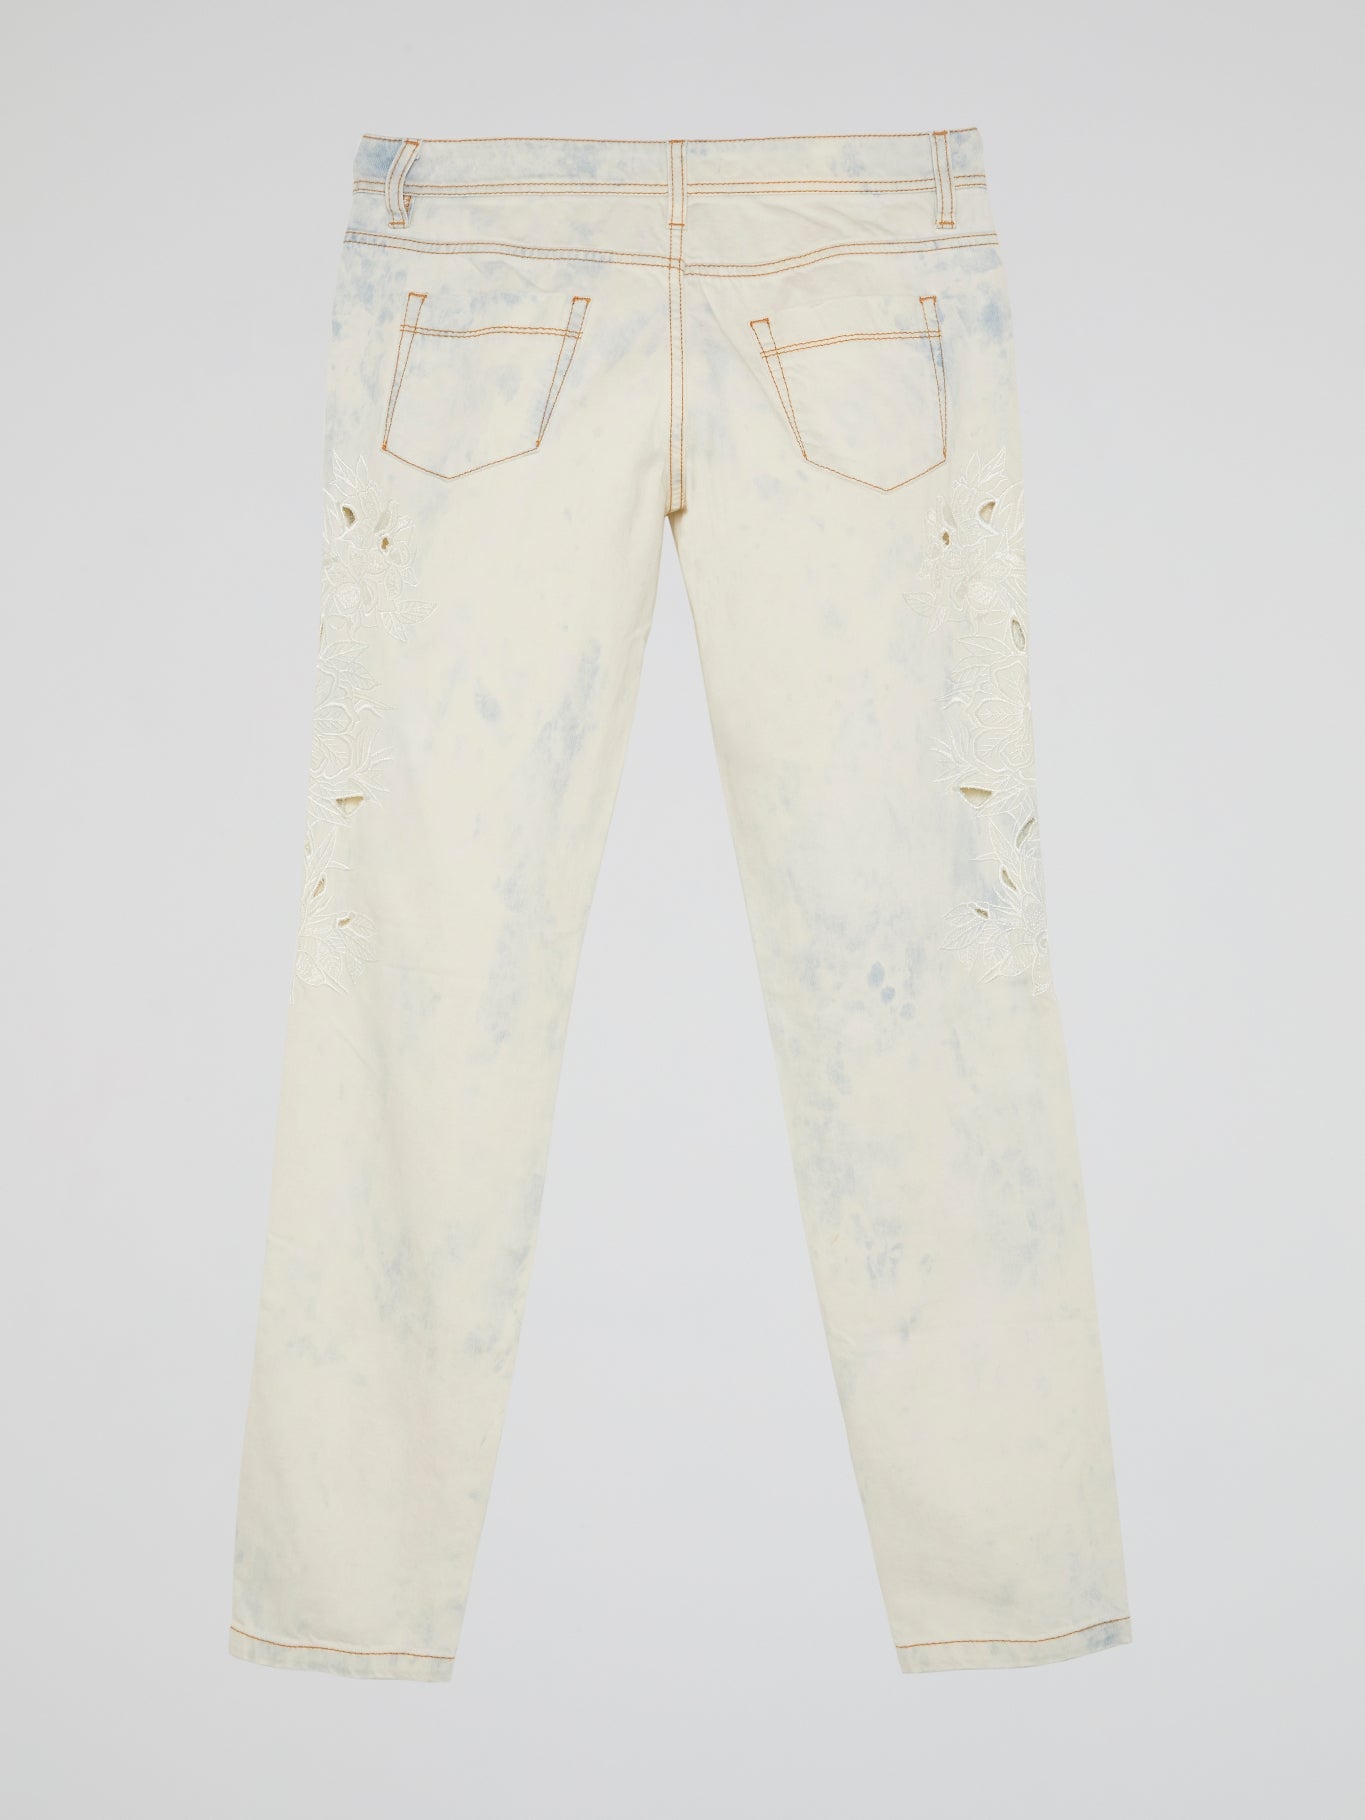 White Acid Wash Jeans